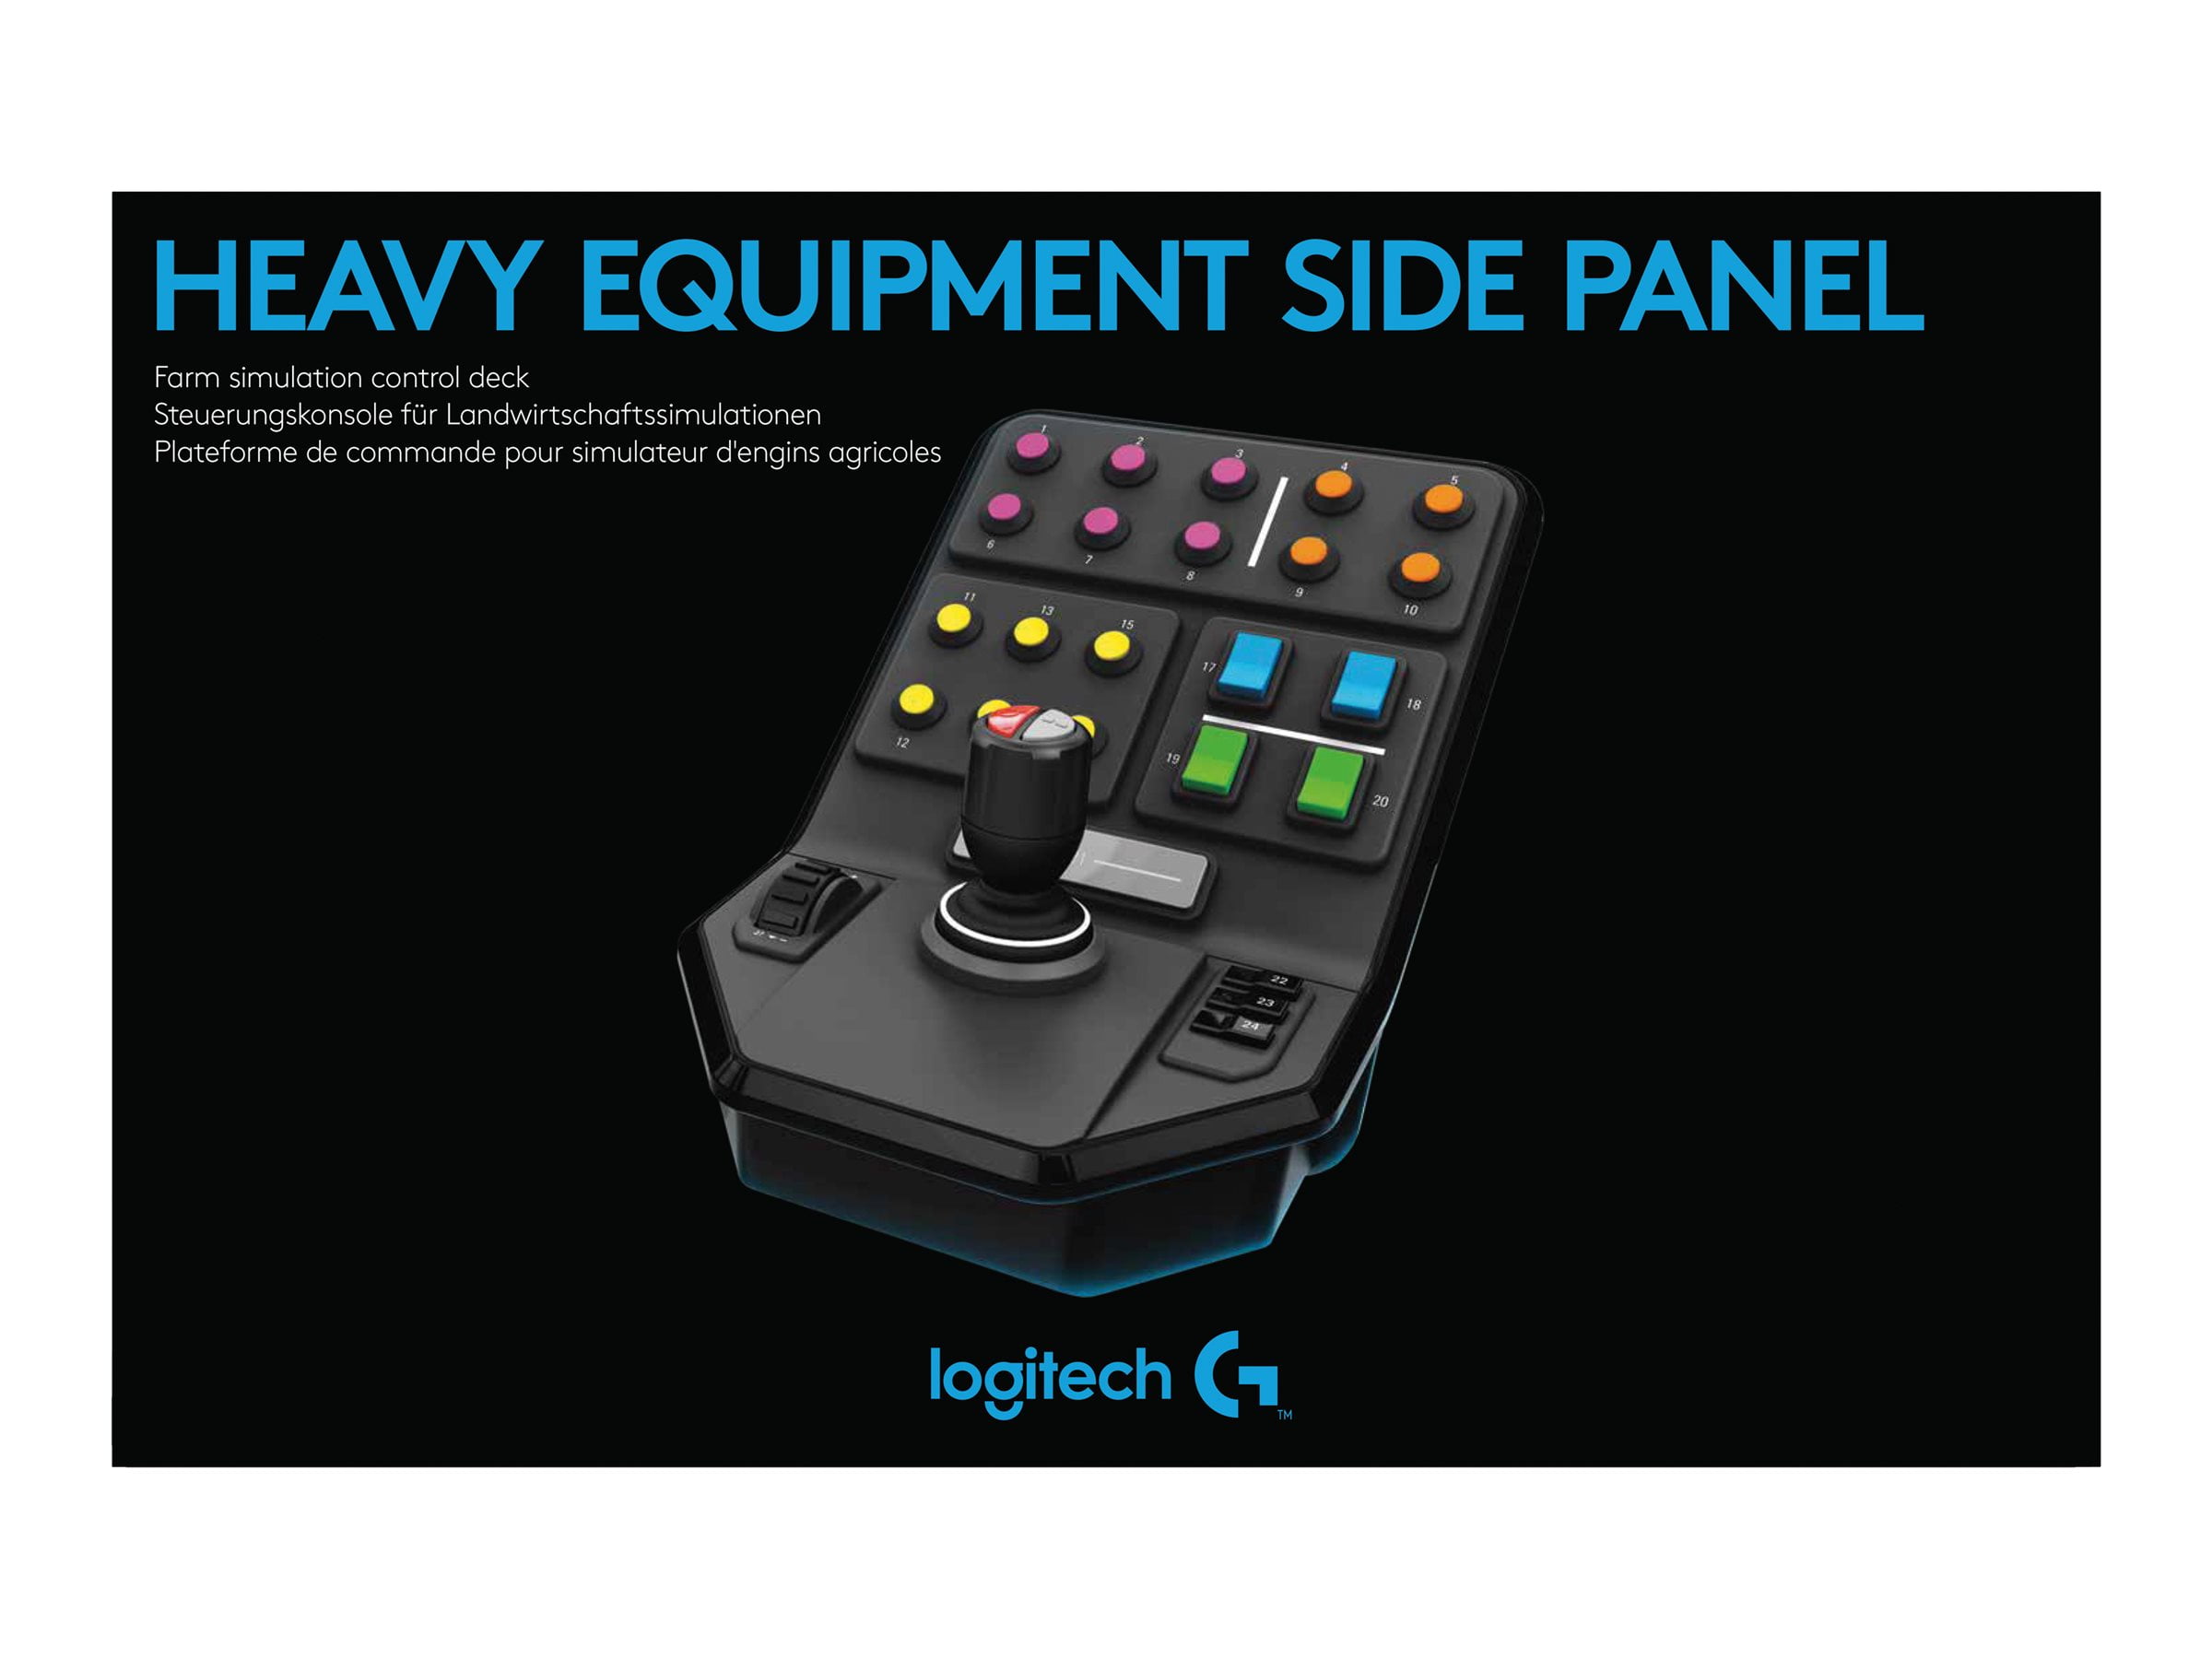 Sprong noot echo Logitech Heavy Equipment Side Panel Simulation Heavy Equipment Control Deck  - Walmart.com